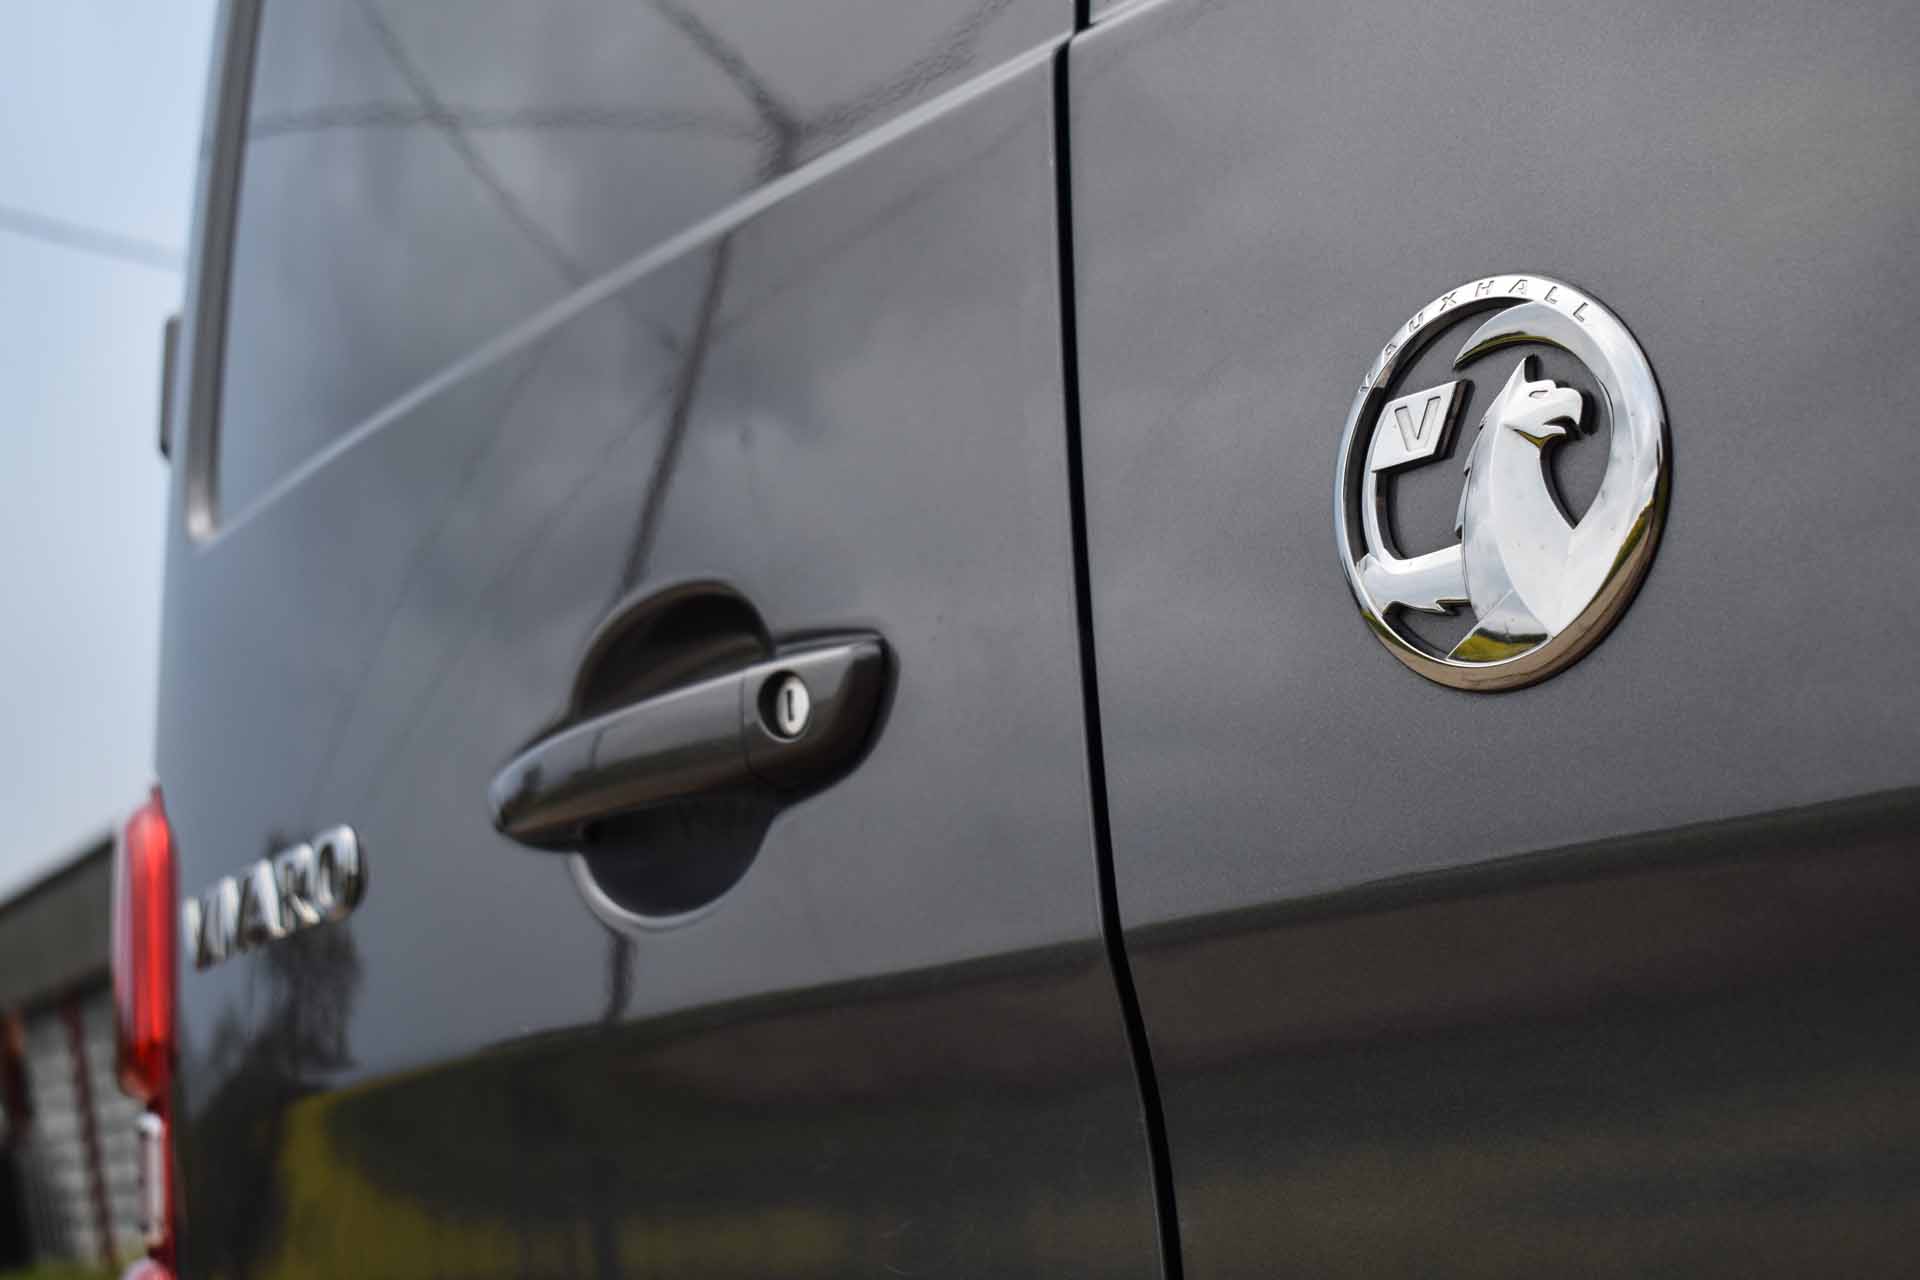 2019 Vauxhall Vivaro Review  WorthReviewing